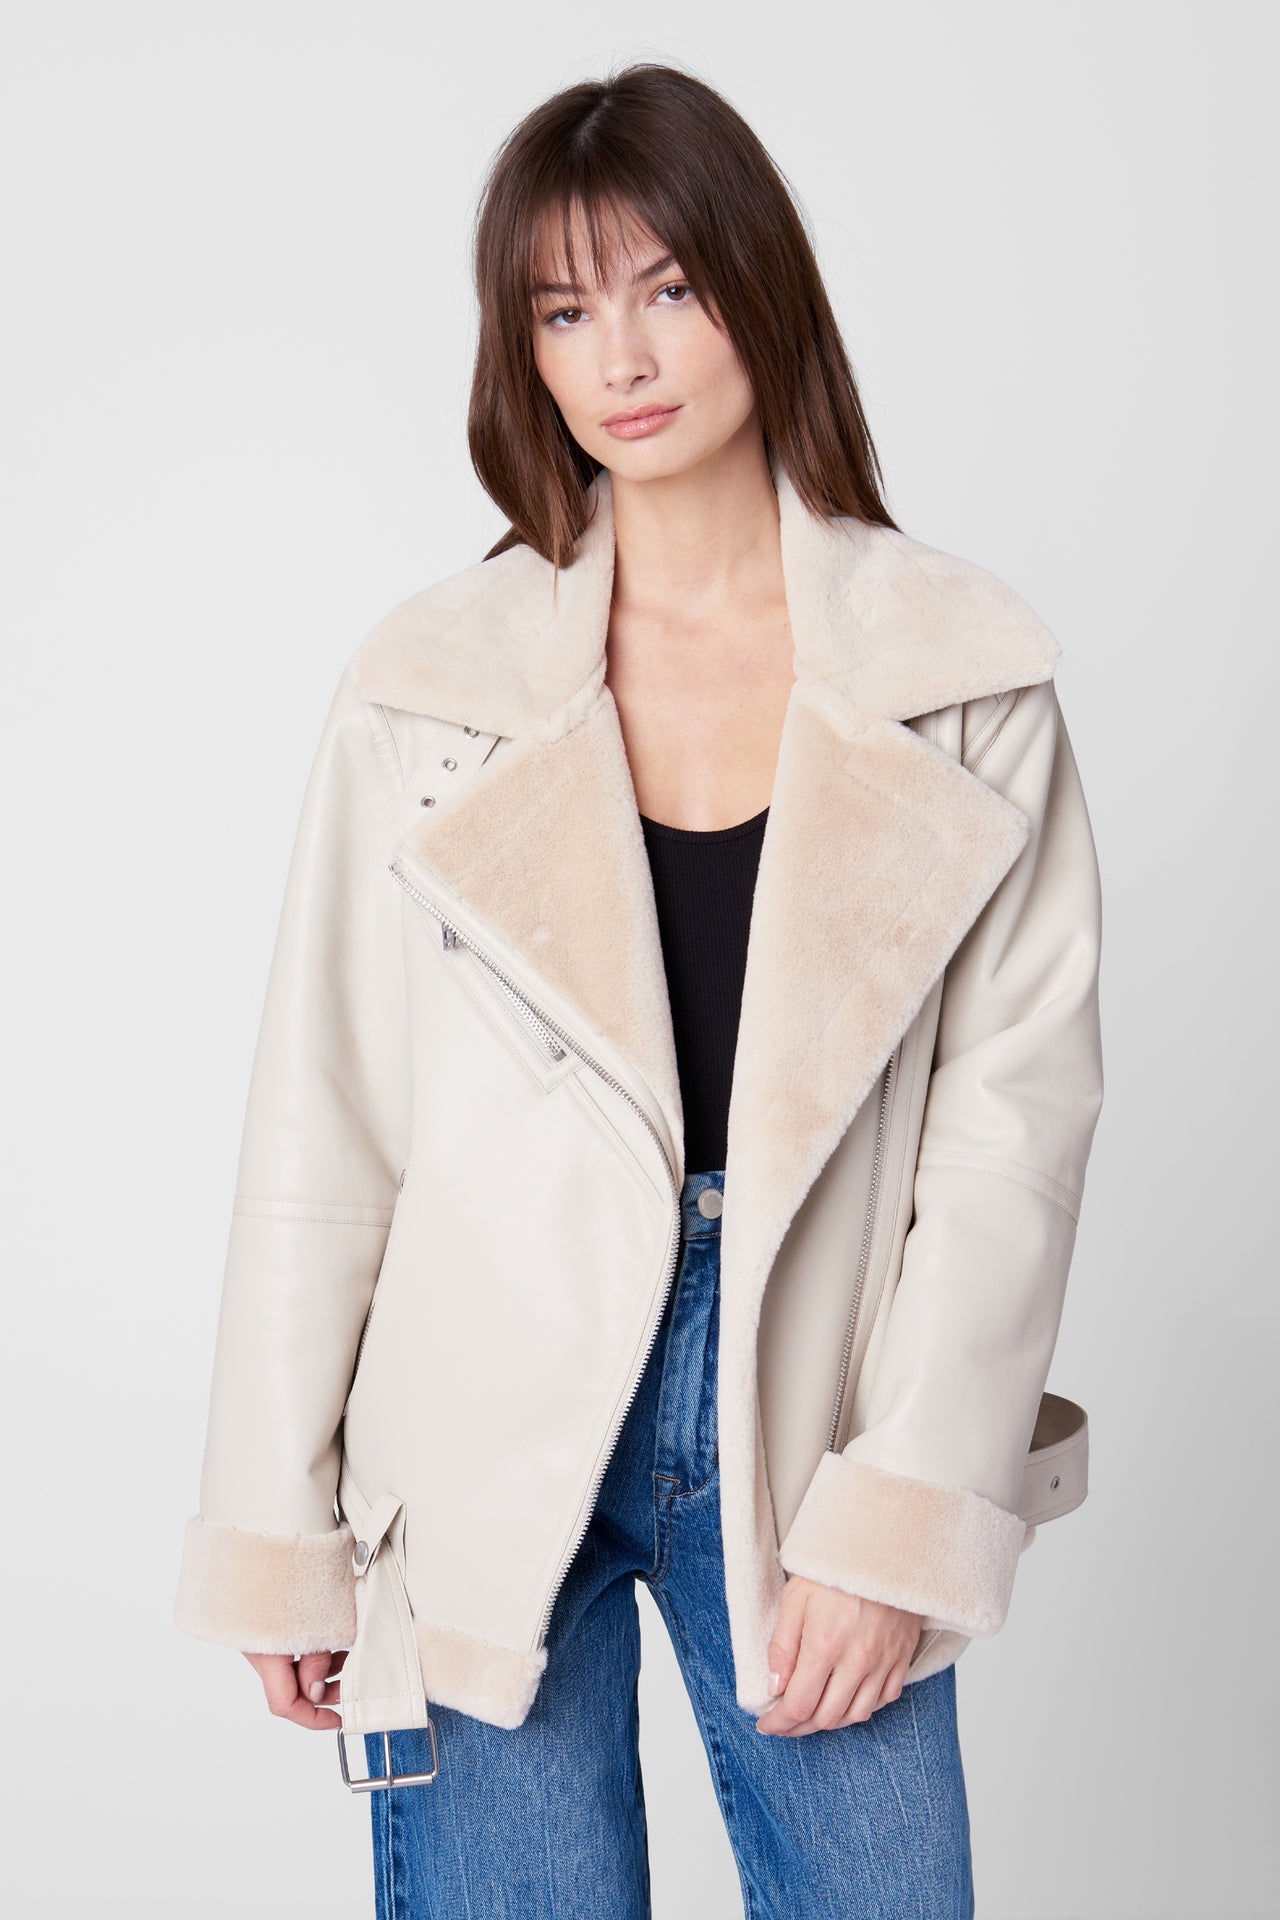 Break The Ice Coat White, Coat Jacket by Blank NYC | LIT Boutique